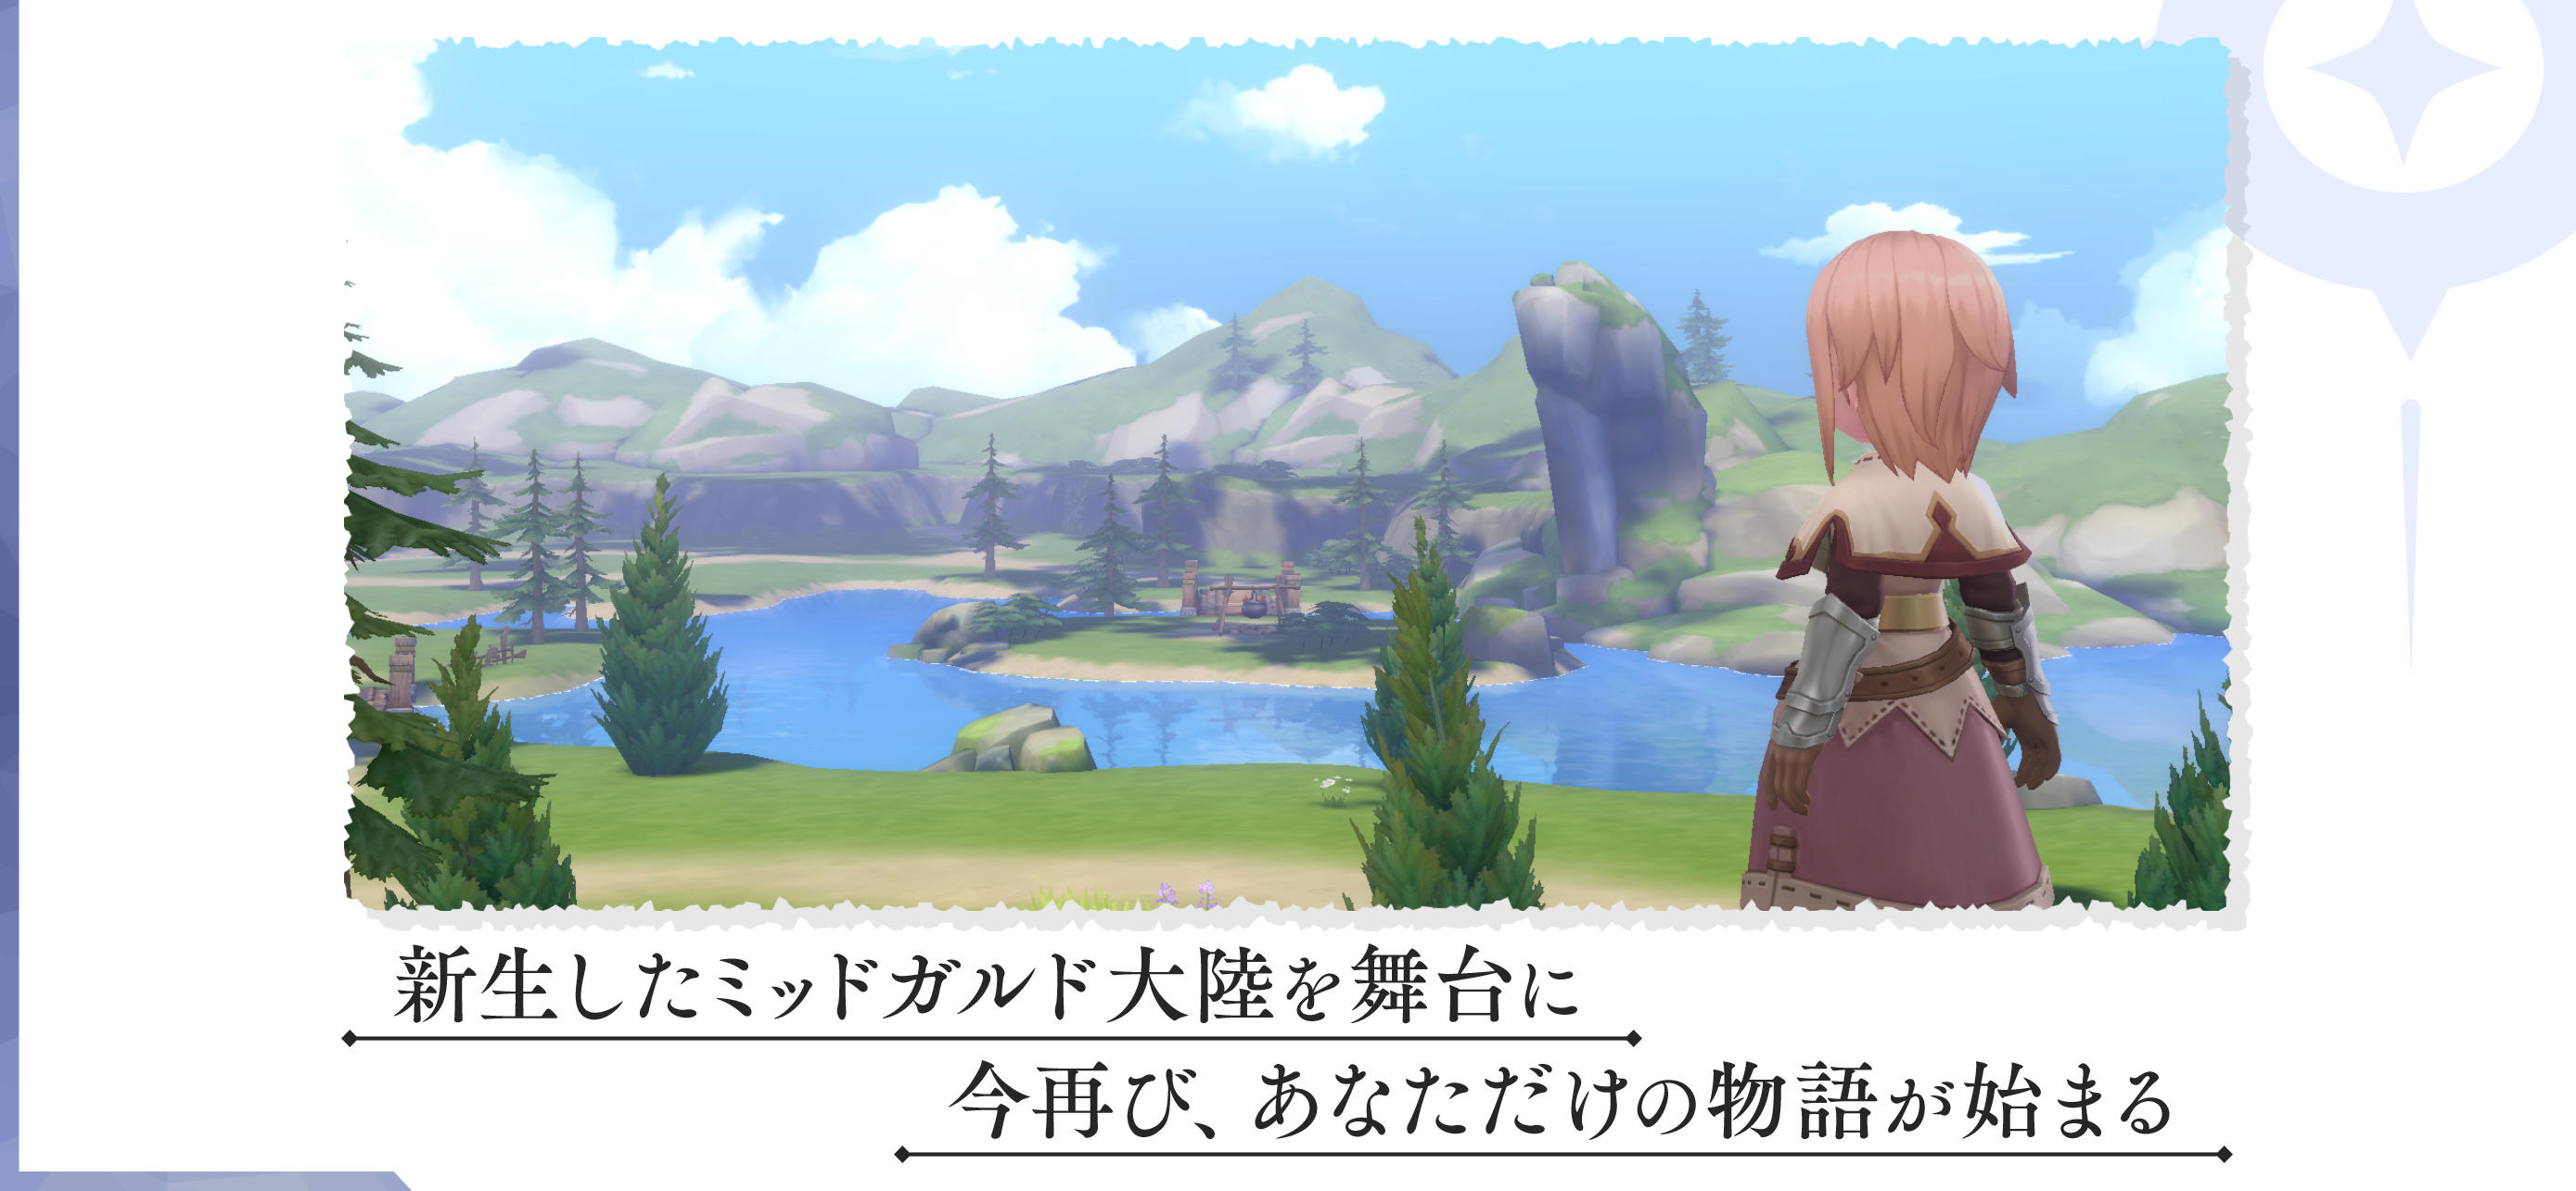 Screenshot 1 of ラグナロクオリジン #本格育成MMORPG #新作 3.13.1